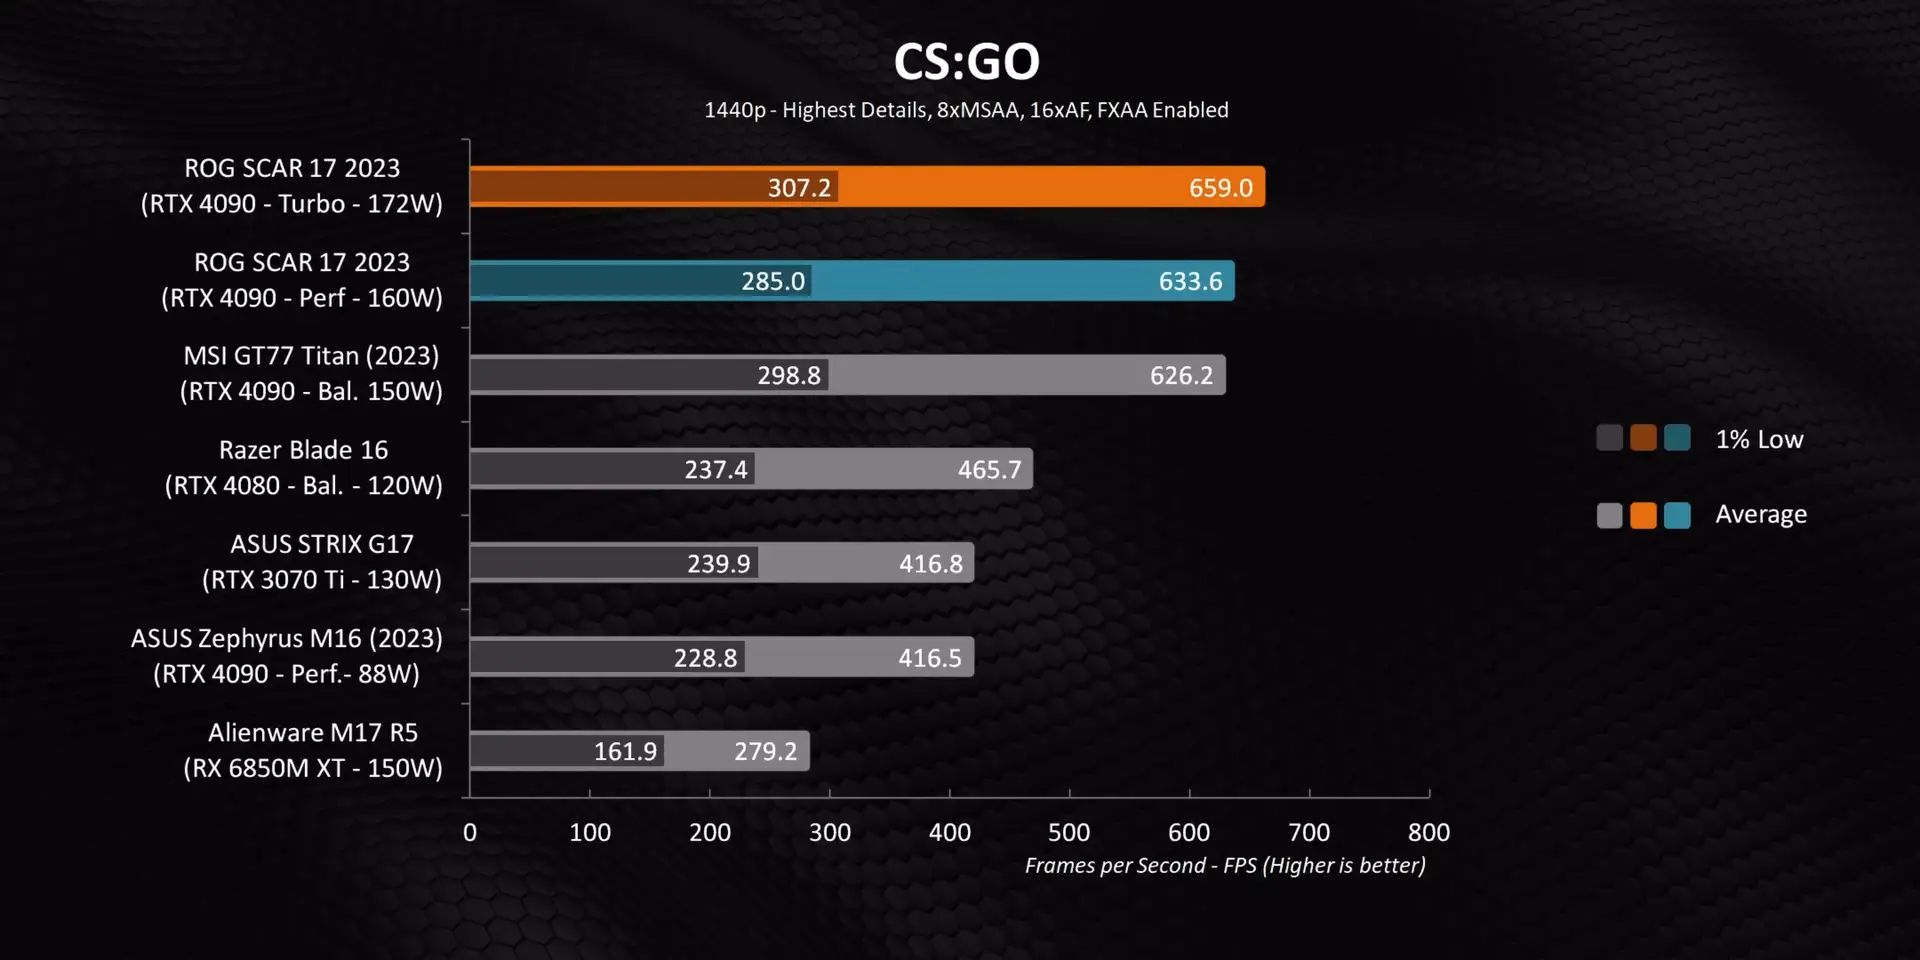  CS:GO Gaming Performance